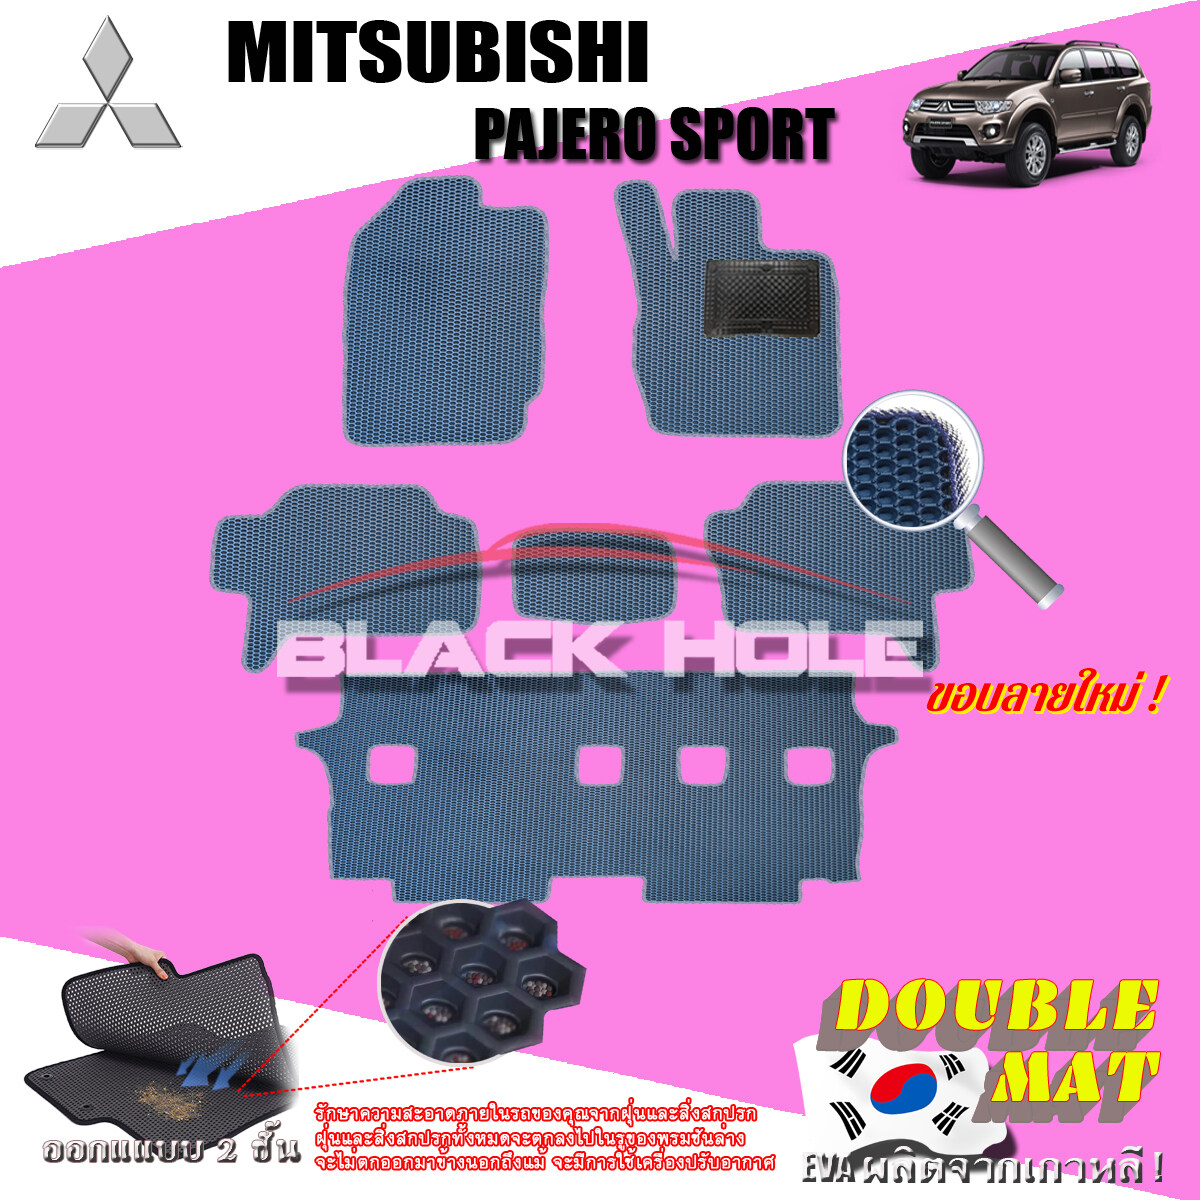 Mitsubishi Pajero Sport ปี 2008 - ปี 2014 พรมรถยนต์Pajero พรมเข้ารูปสองชั้นแบบรูรังผึ้ง Blackhole Double Mat (ชุดห้องโดยสาร) สี SET B ( 6 Pcs. ) New Velcro Blue - น้ำเงินขอบลายใหม่ ( 6 ชิ้น ) สี SET B ( 6 Pcs. ) New Velcro Blue - น้ำเงินขอบลายใหม่ ( 6 ชิ้น )